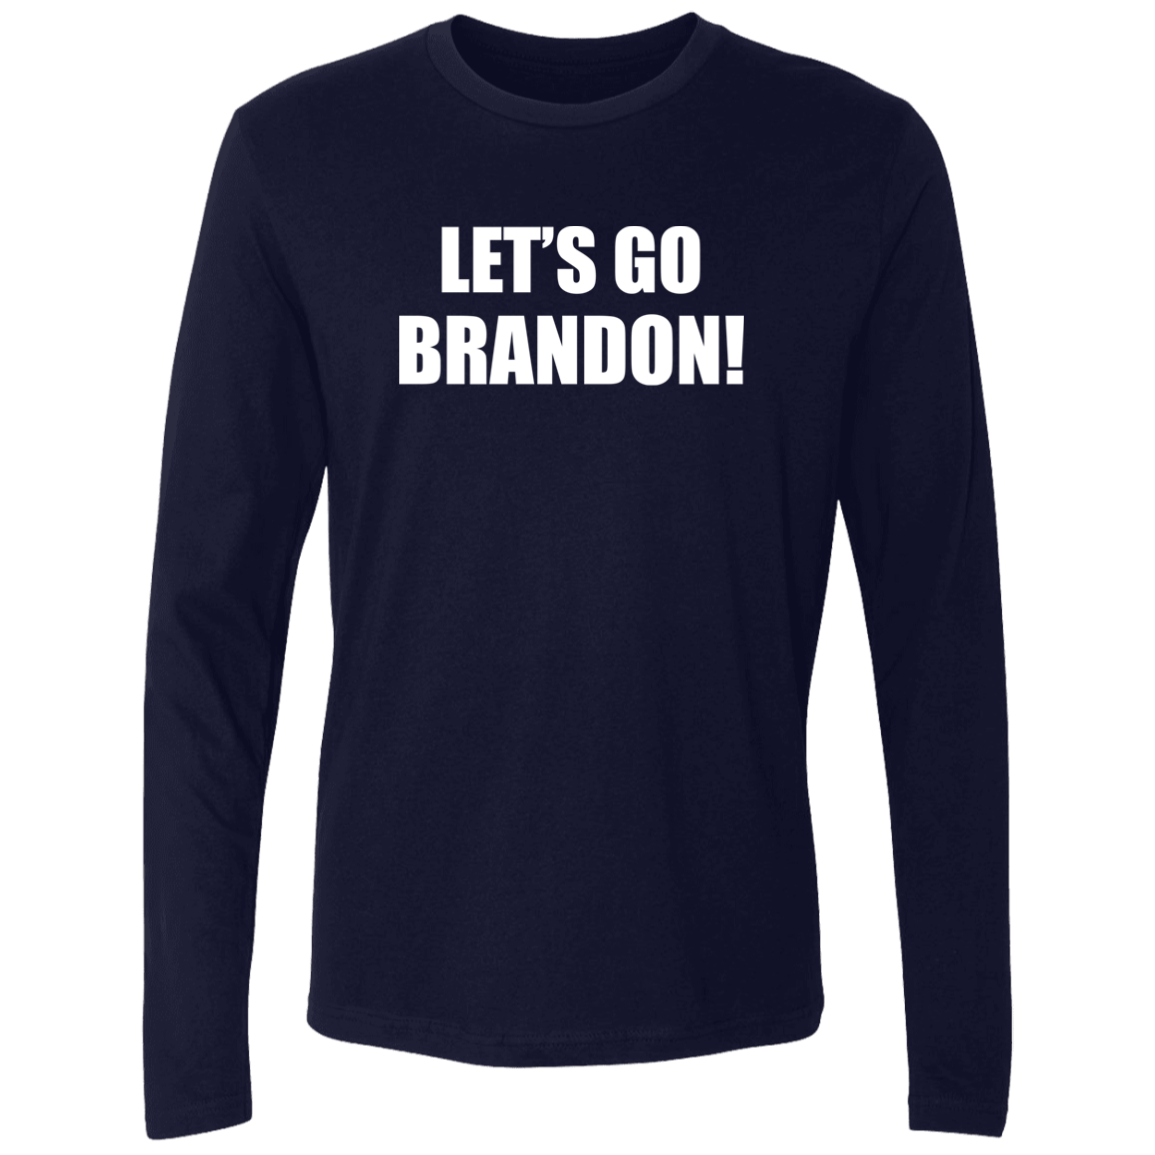 Let's Go Brandon! - Classic Design